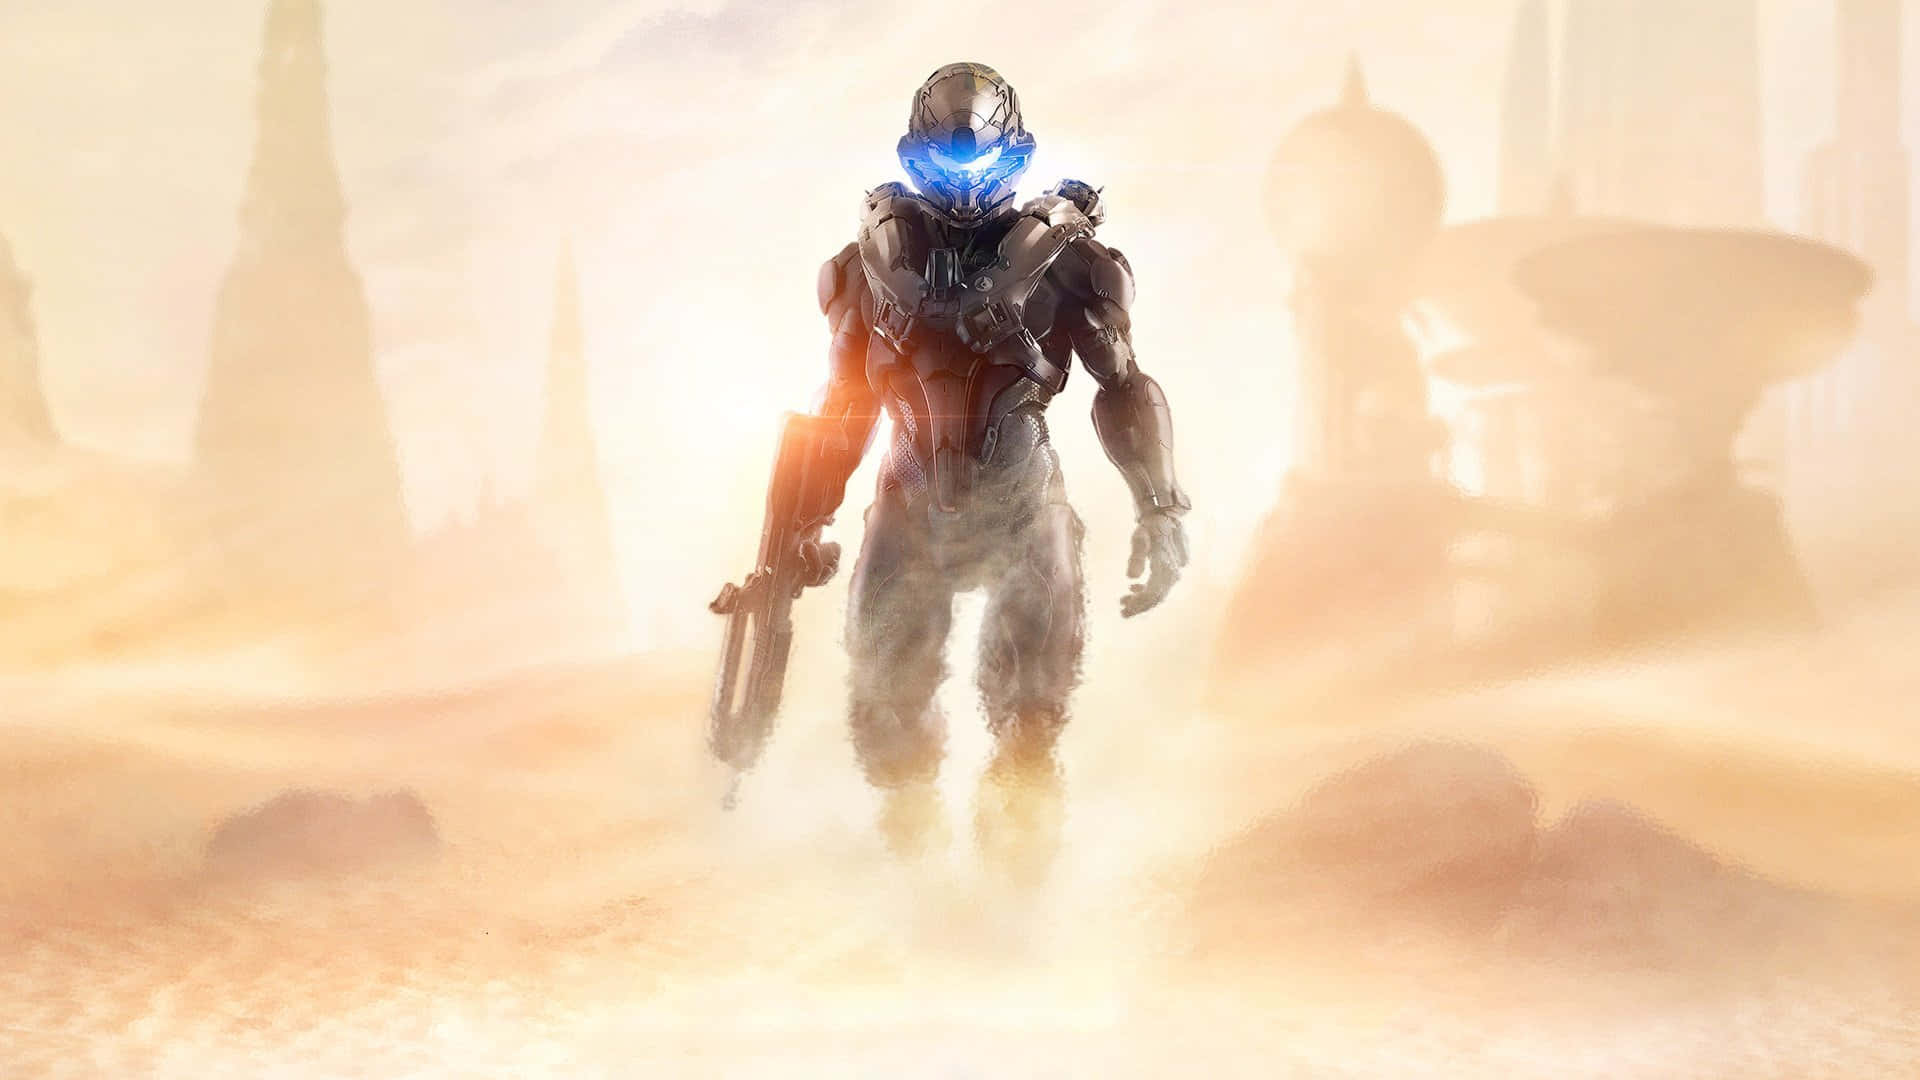 Cool Halo Walking In Desert Wallpaper